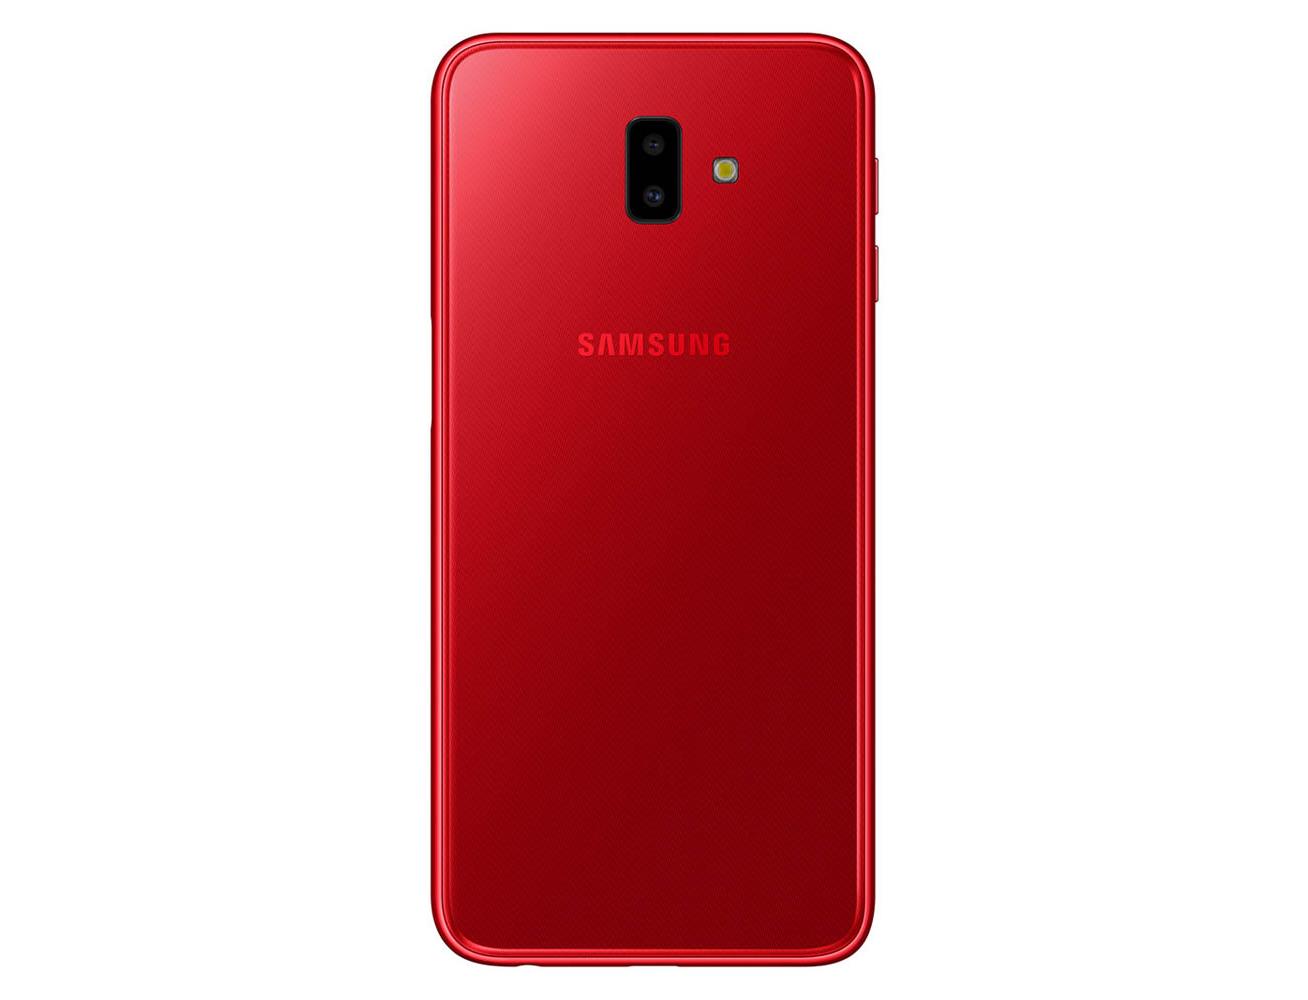 Samsung galaxy j6 2018. Samsung Galaxy j6+. Samsung Galaxy j6 Plus 2018. Samsung Galaxy j6 Plus 32gb. Samsung Galaxy j6+ (2018).